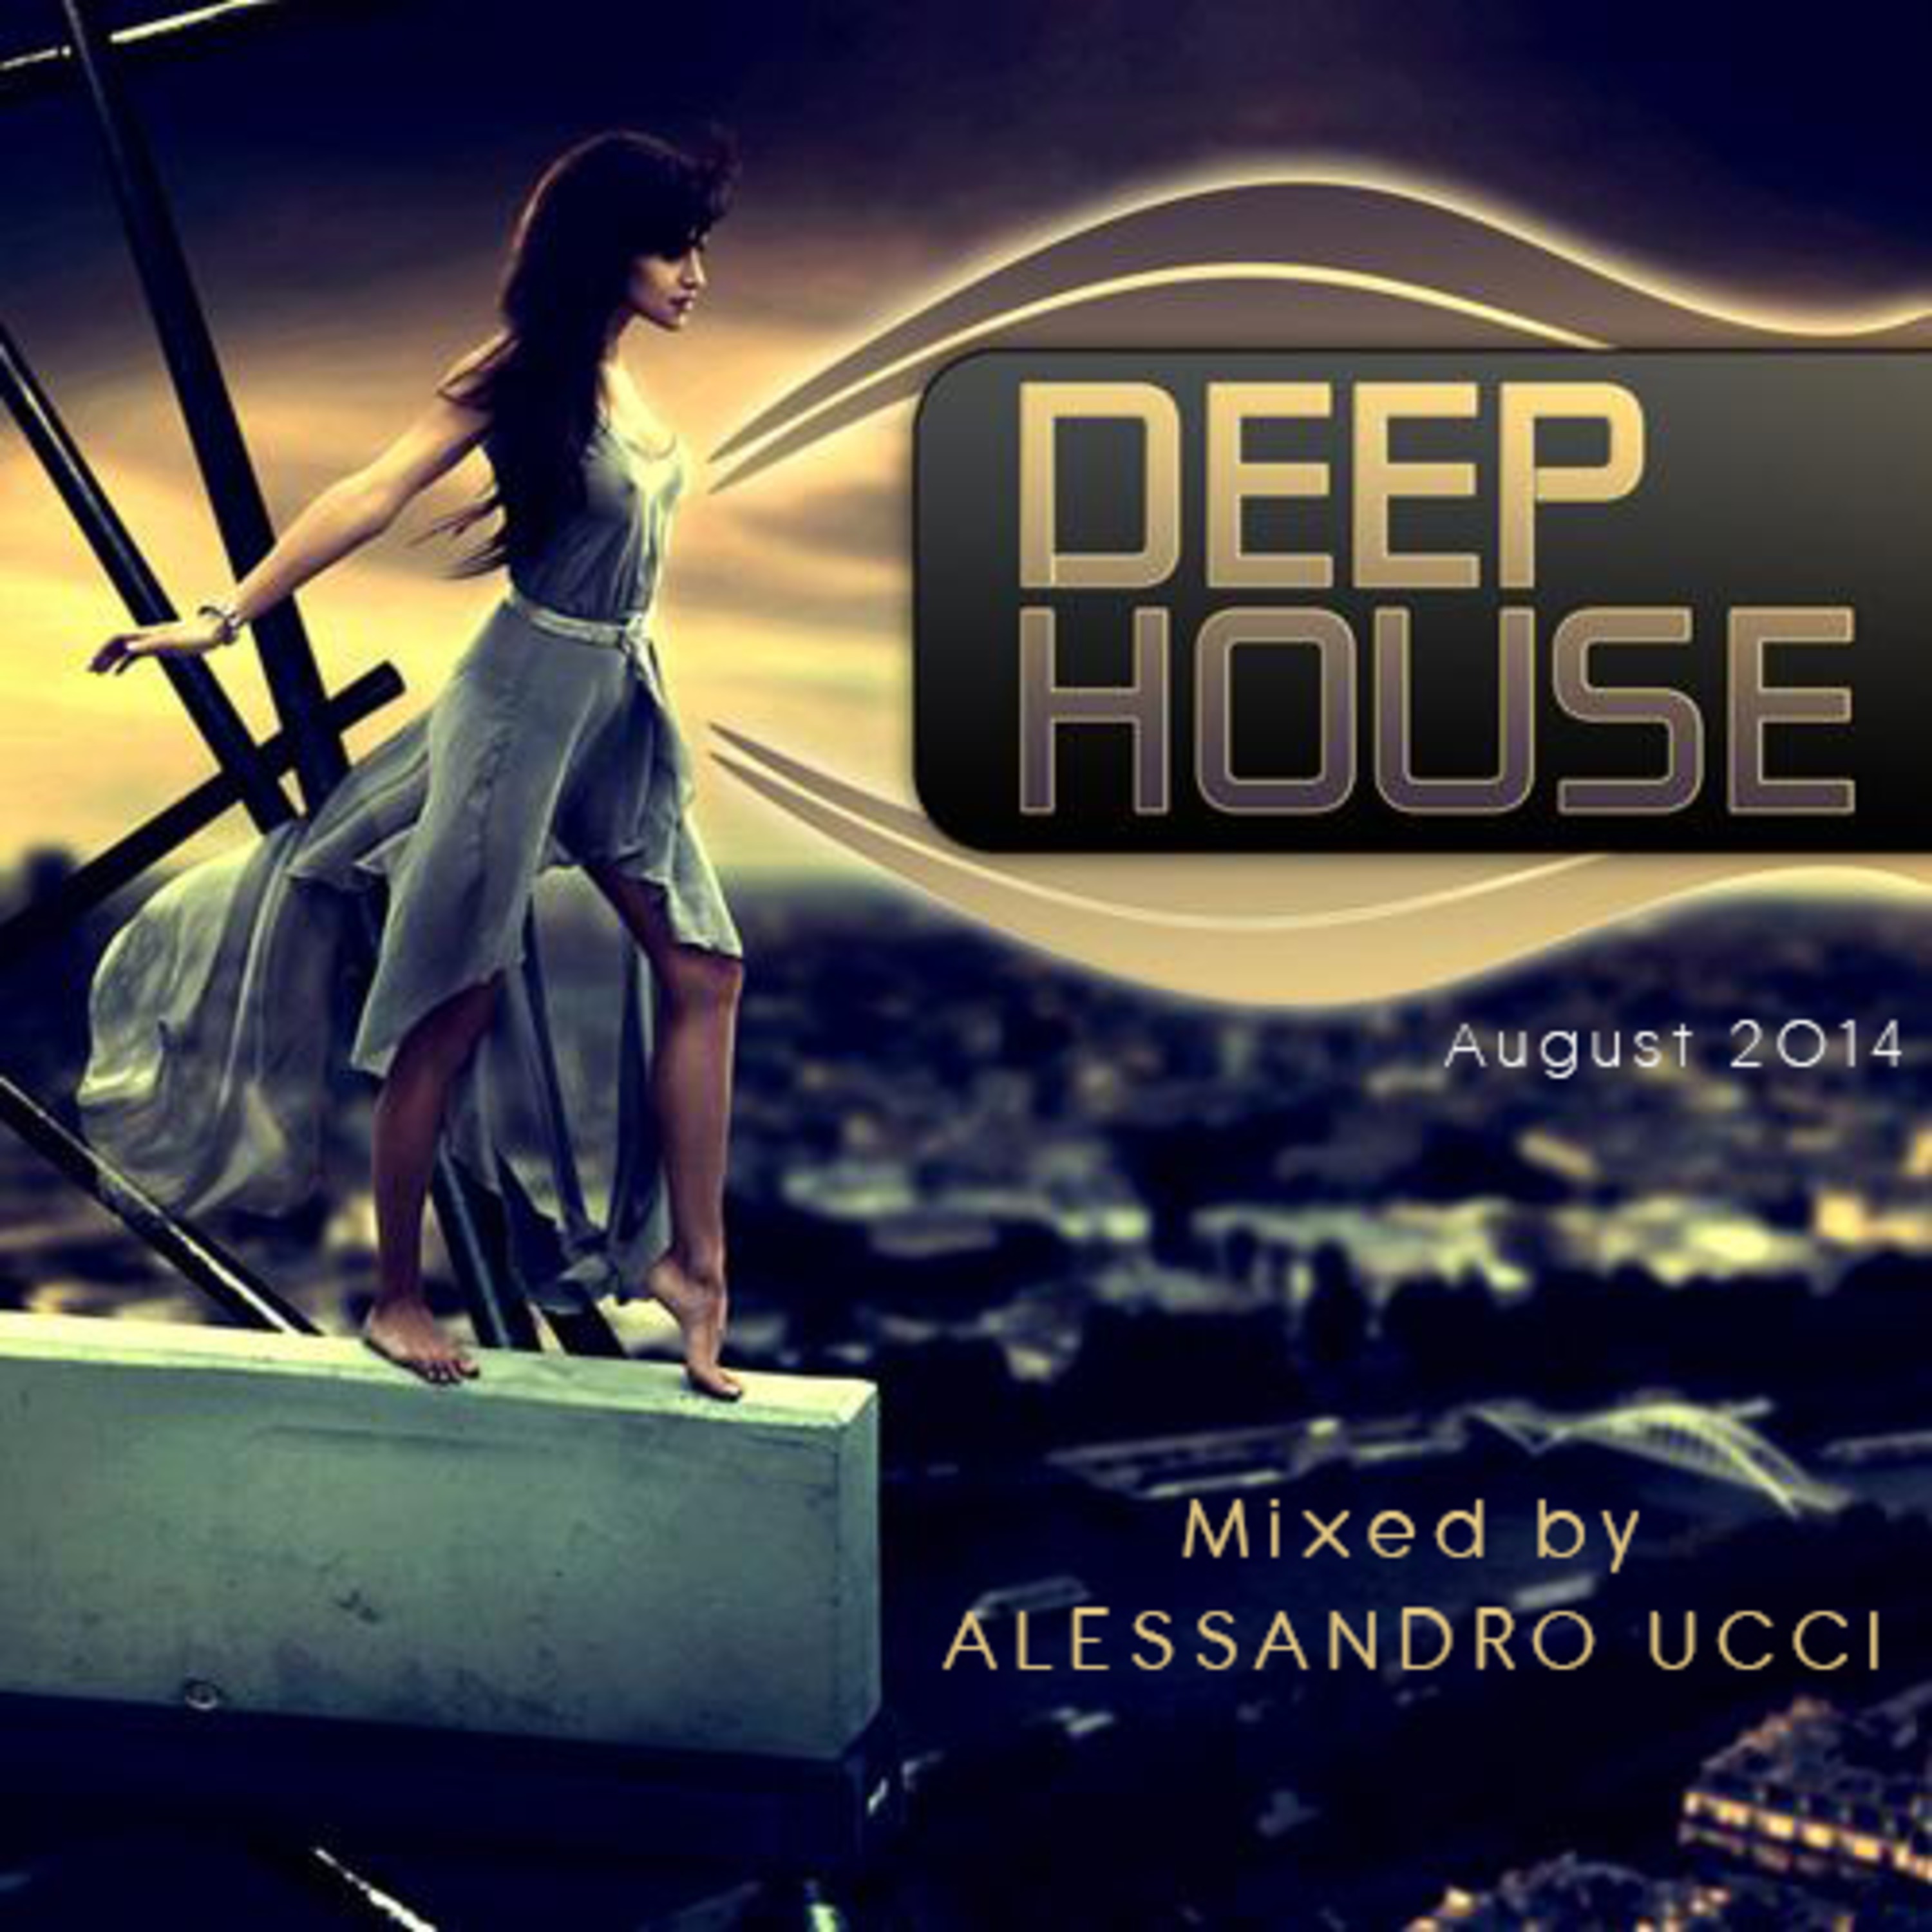 Deep house music музыка. Deep House. Deep House обложка альбома. Красивая обложка дип Хаус. Картинки Deep House.